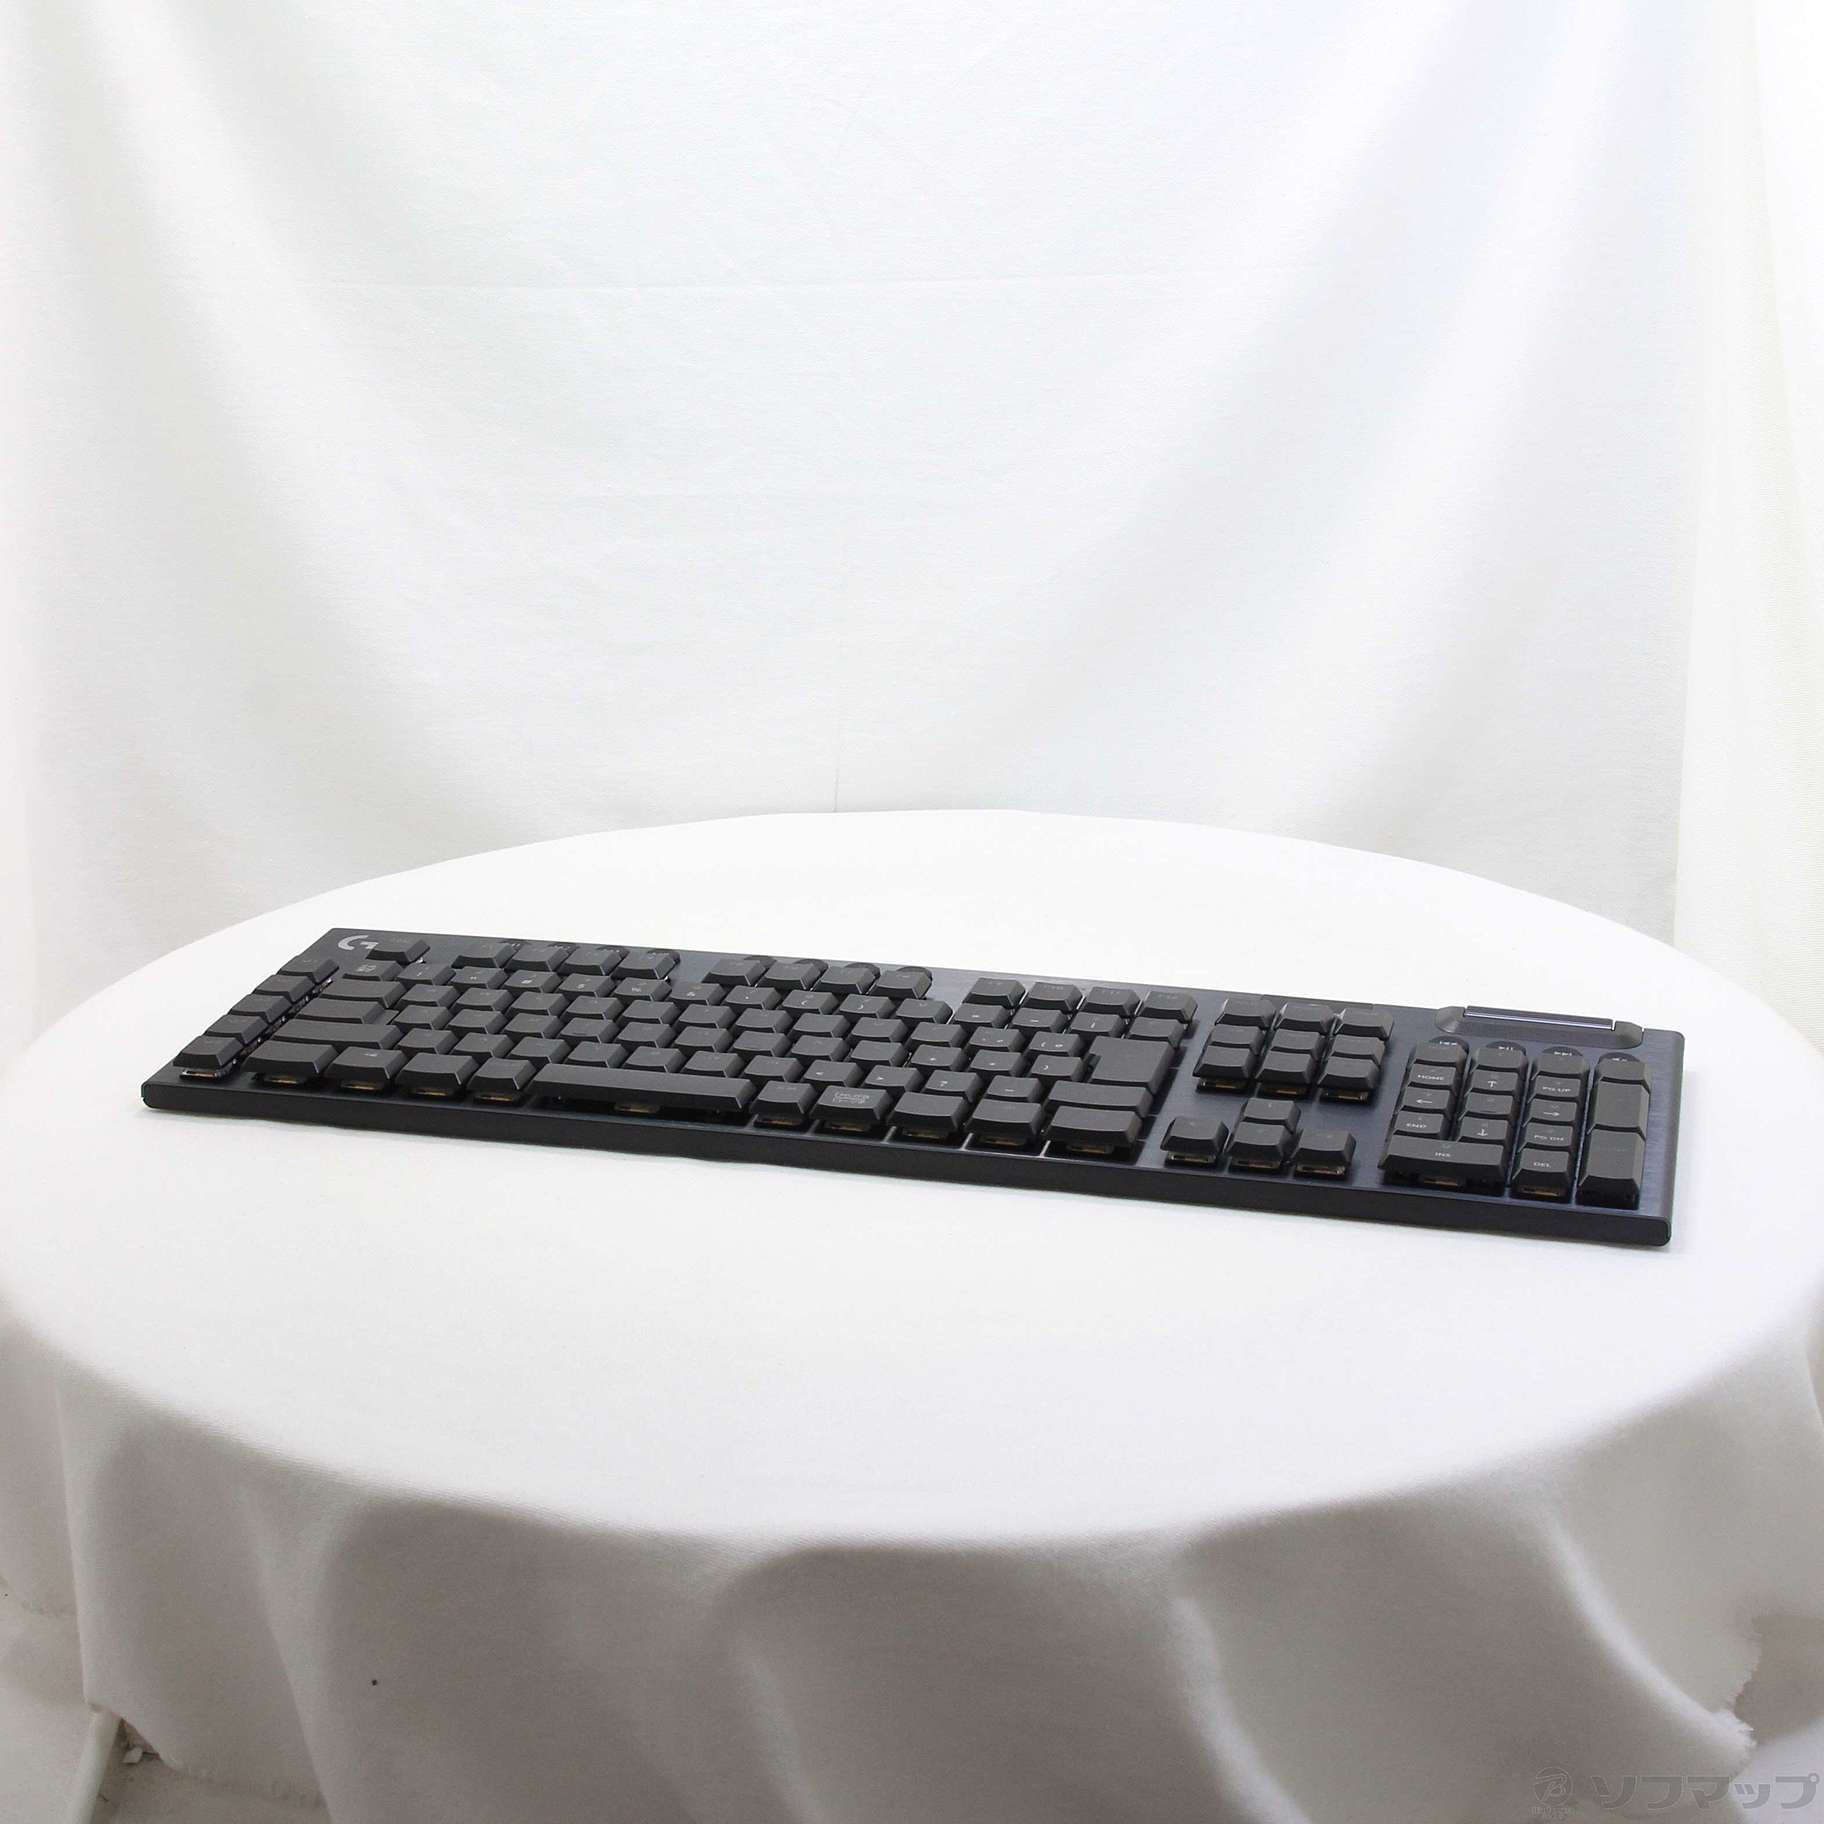 中古】G913 LIGHTSPEED Wireless Mechanical Gaming Keyboard-Clicky